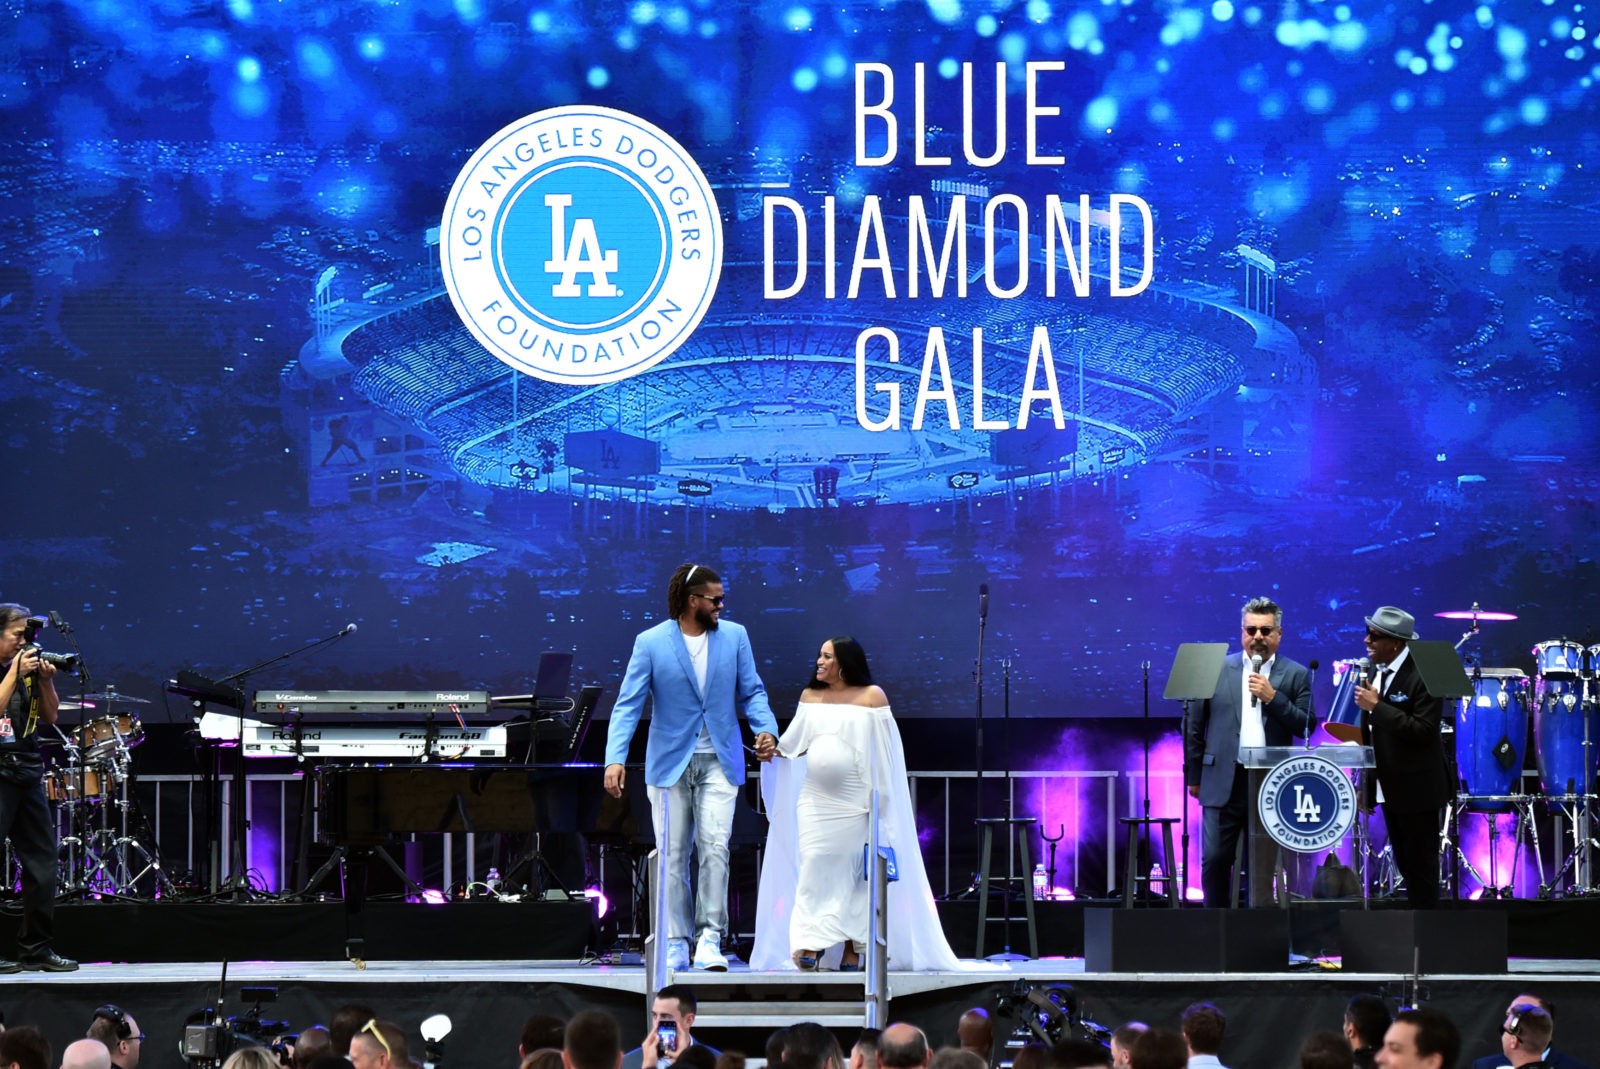 LA Dodgers Blue Diamond Gala